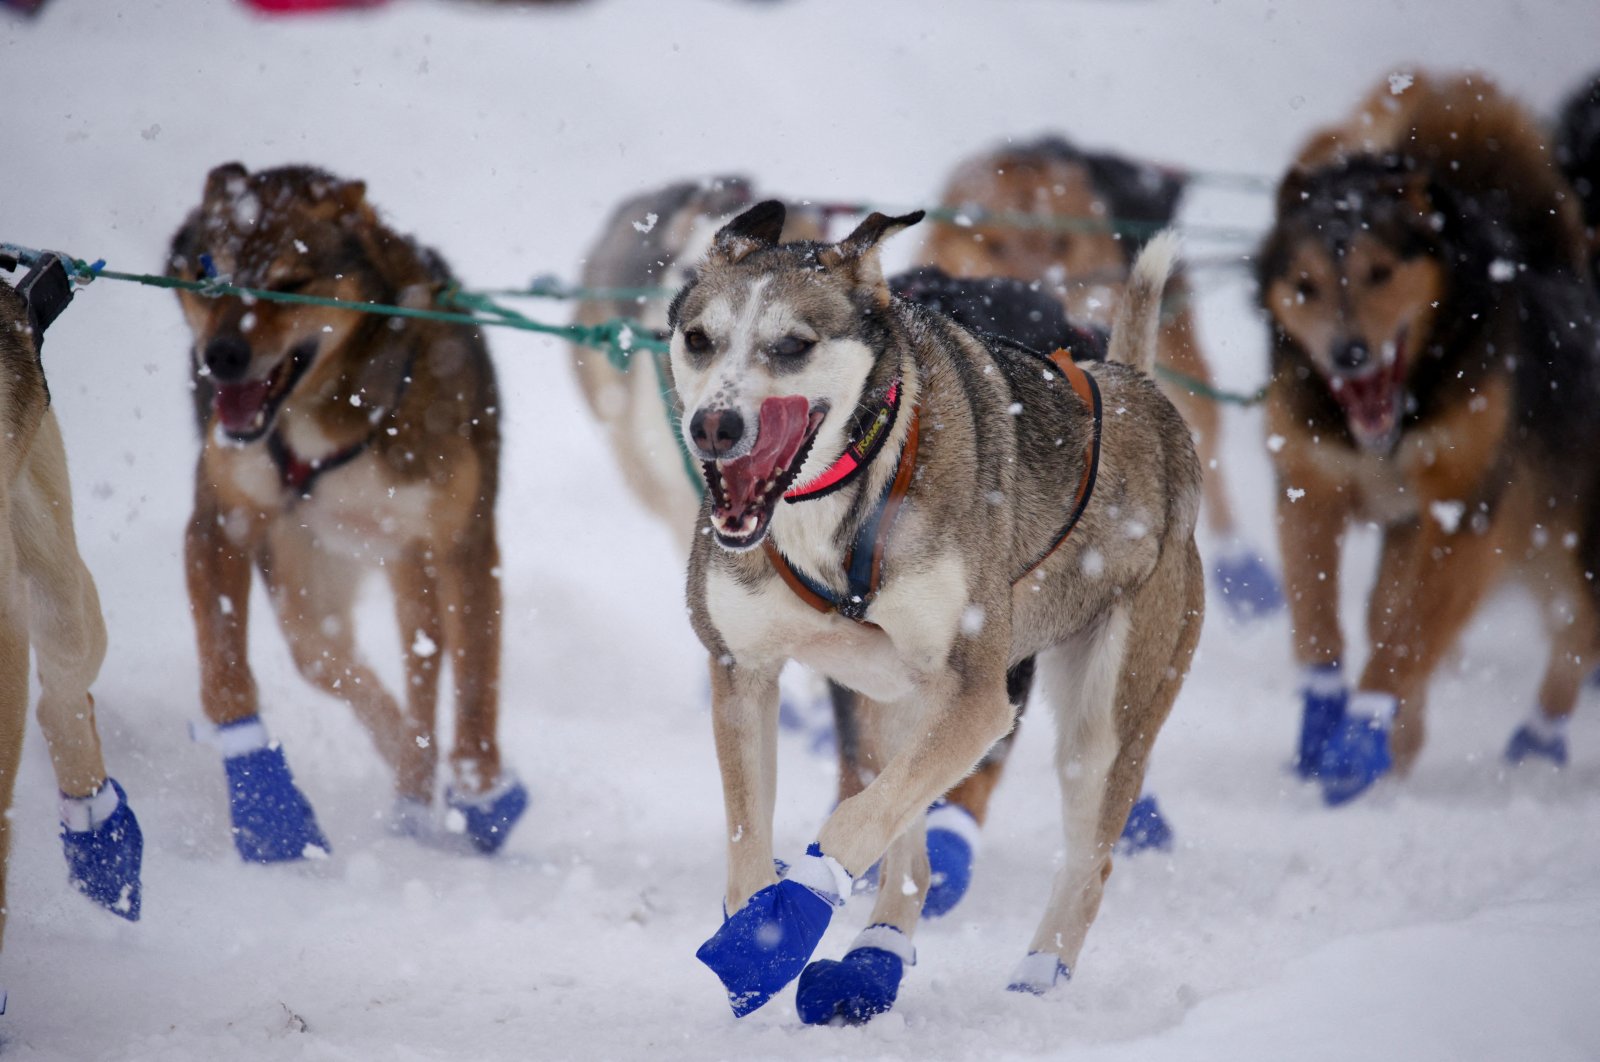 Baltonya mana?  Balapan kereta luncur anjing Iditarod tahunan ke-50 dimulai di Alaska